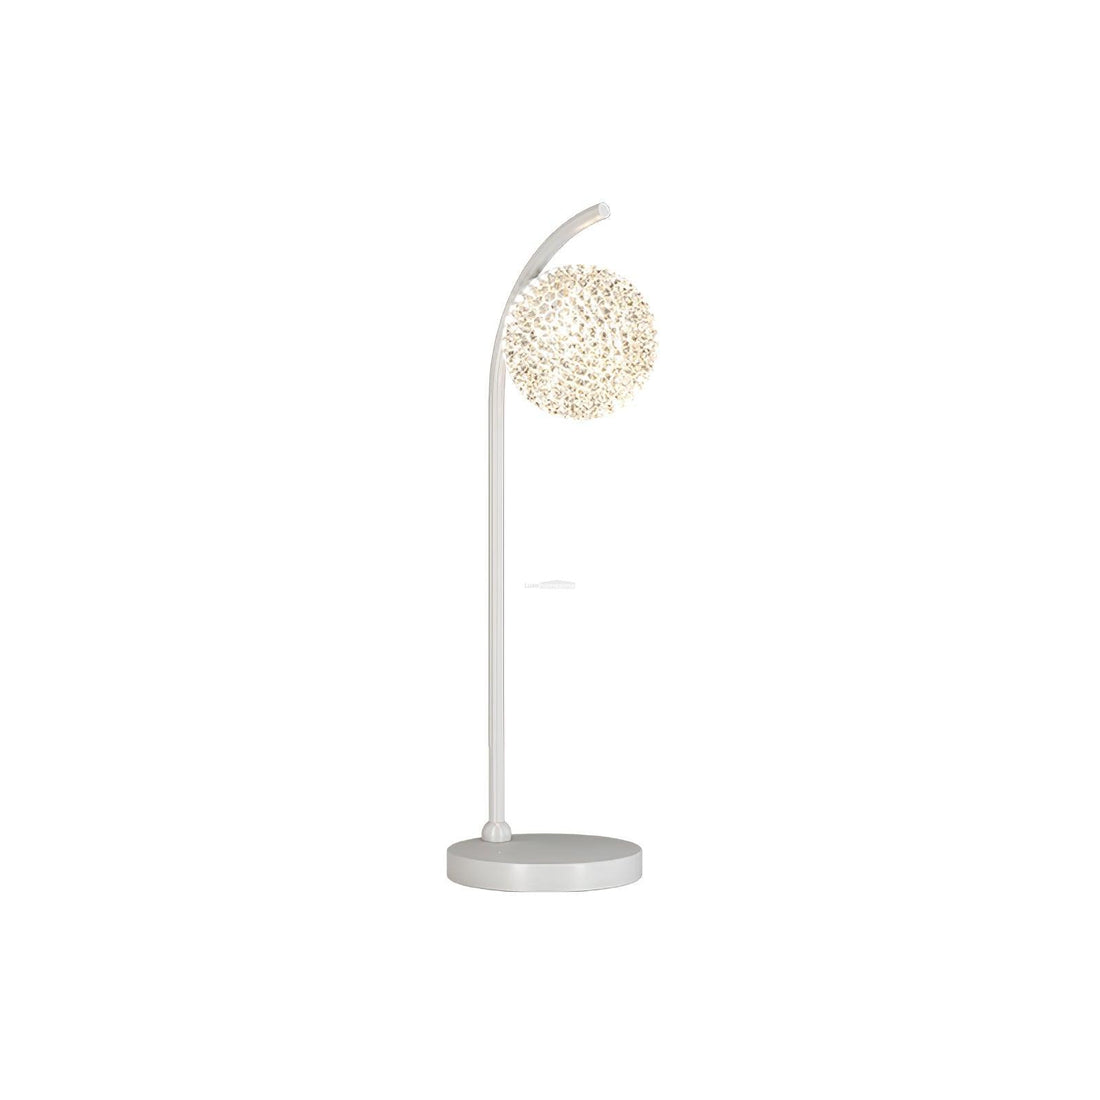 Ksovv Crystal Table Lamp  ∅ 5.5″